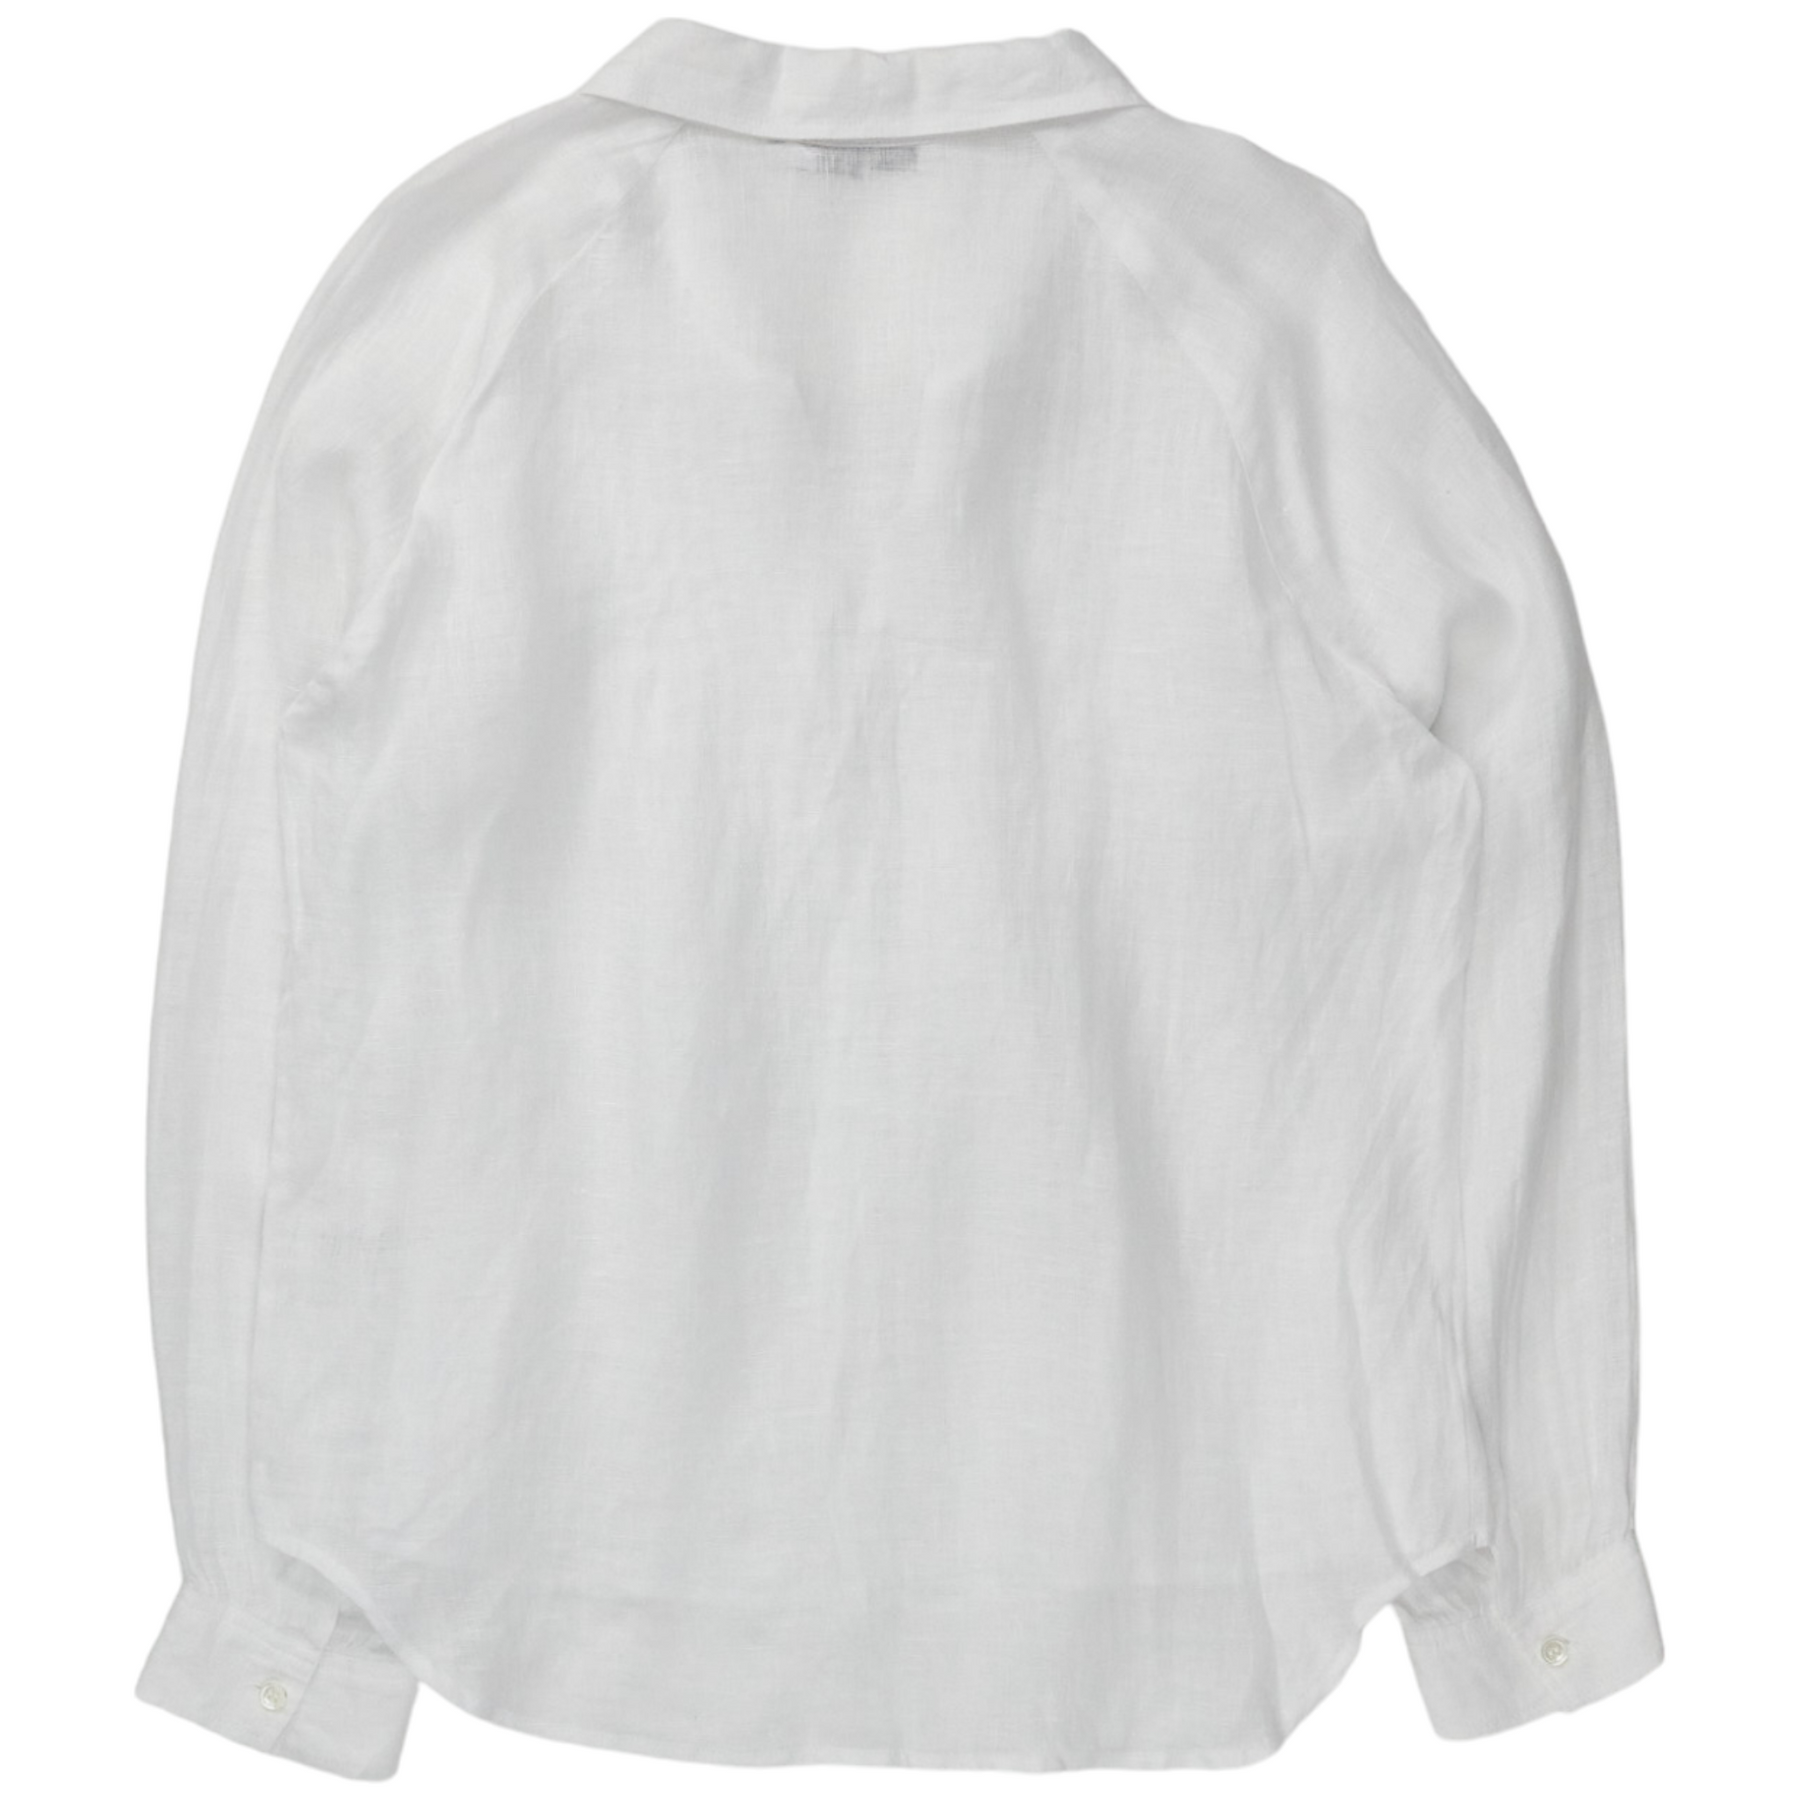 NRBY White Linen Pin-Tuck Shirt